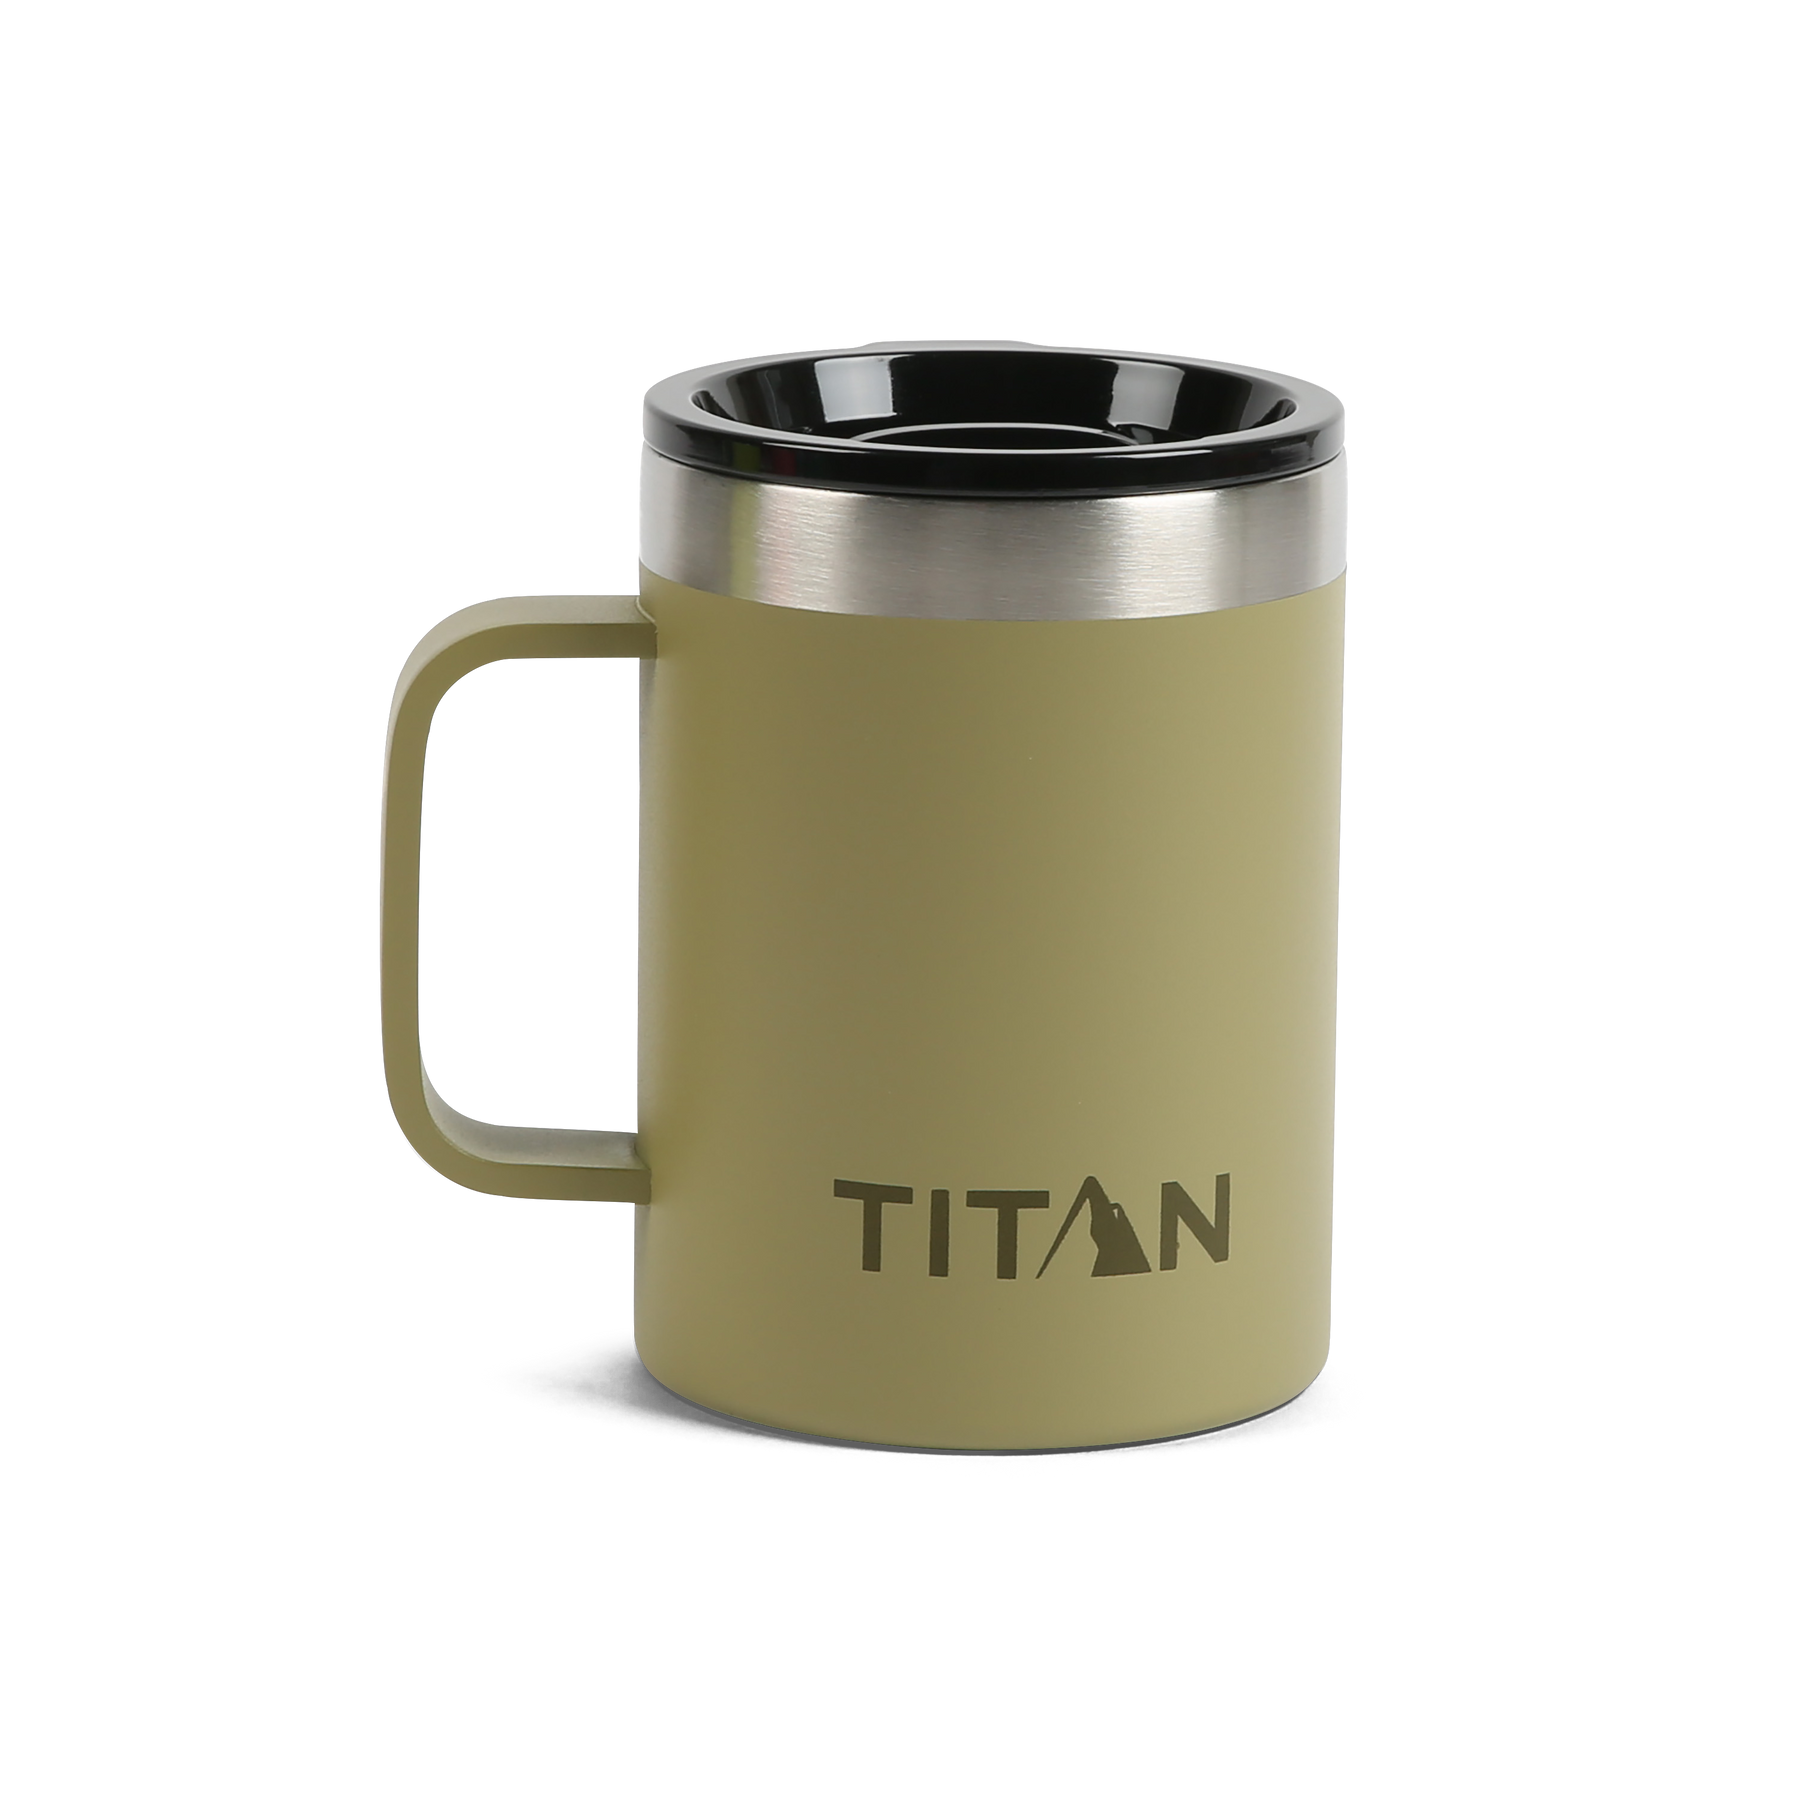  Arctic Zone Titan Thermal Mug - 14 oz. 151562